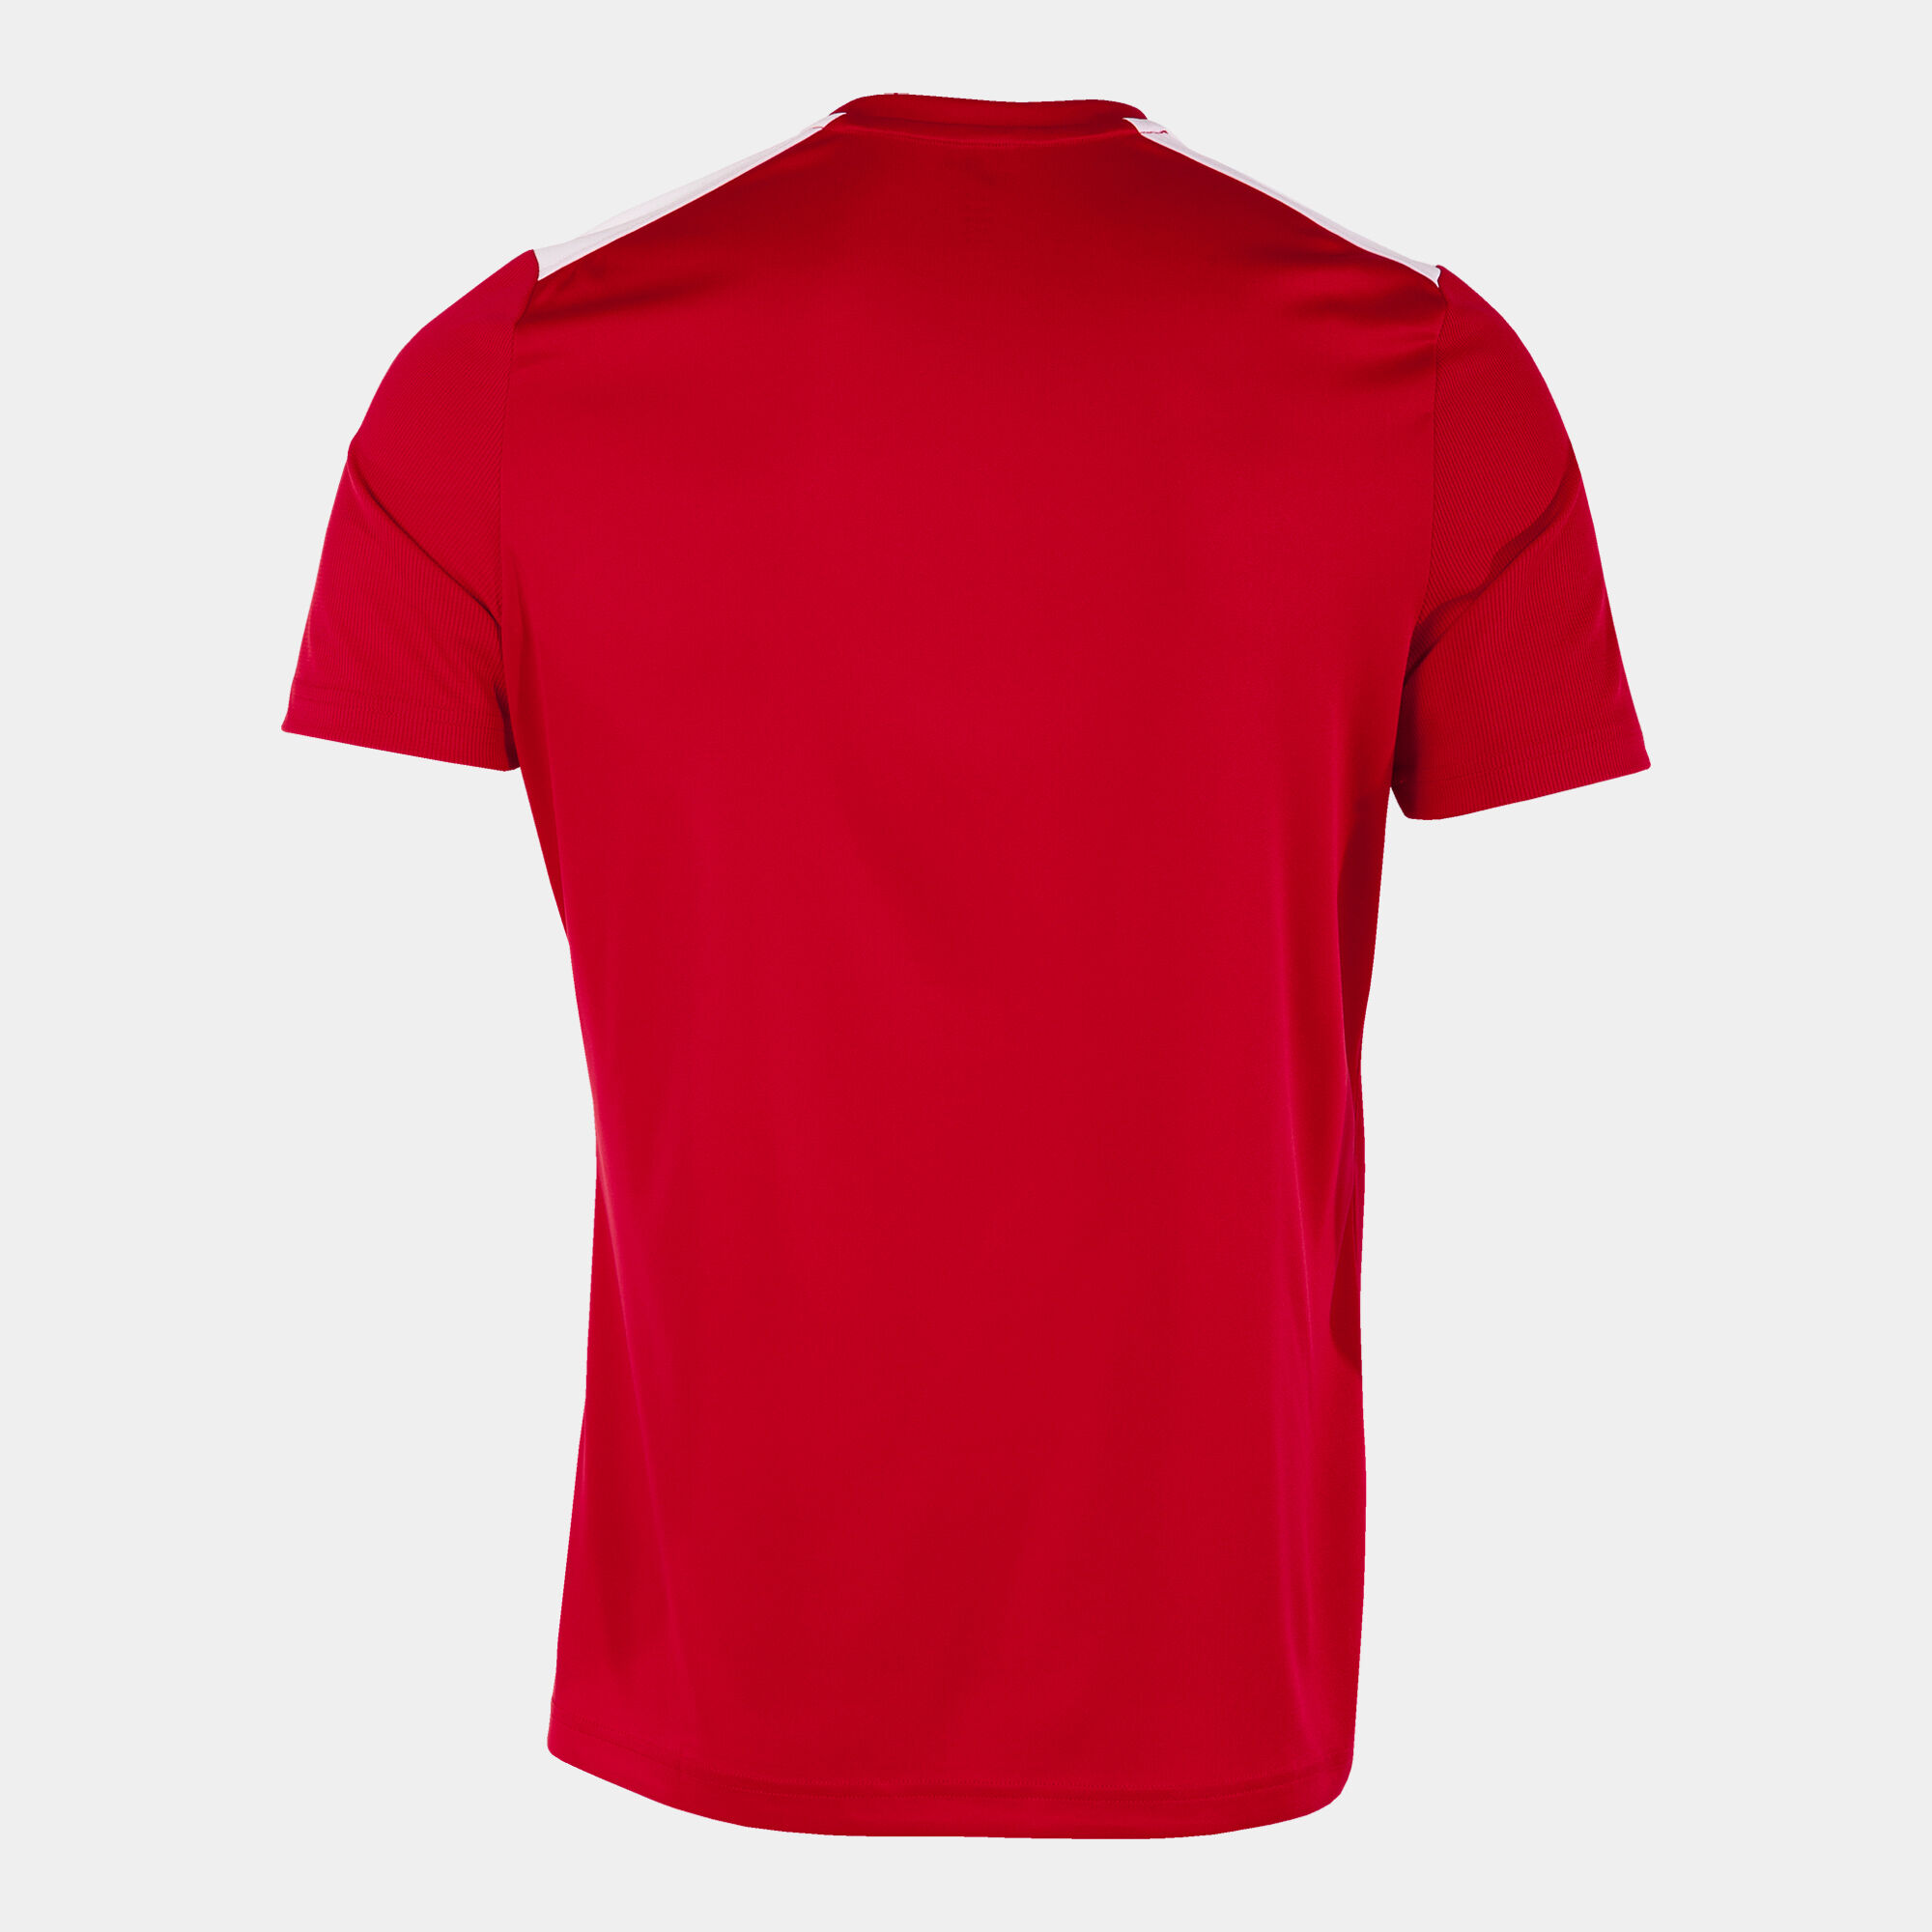 Camiseta manga corta hombre Championship VII rojo blanco